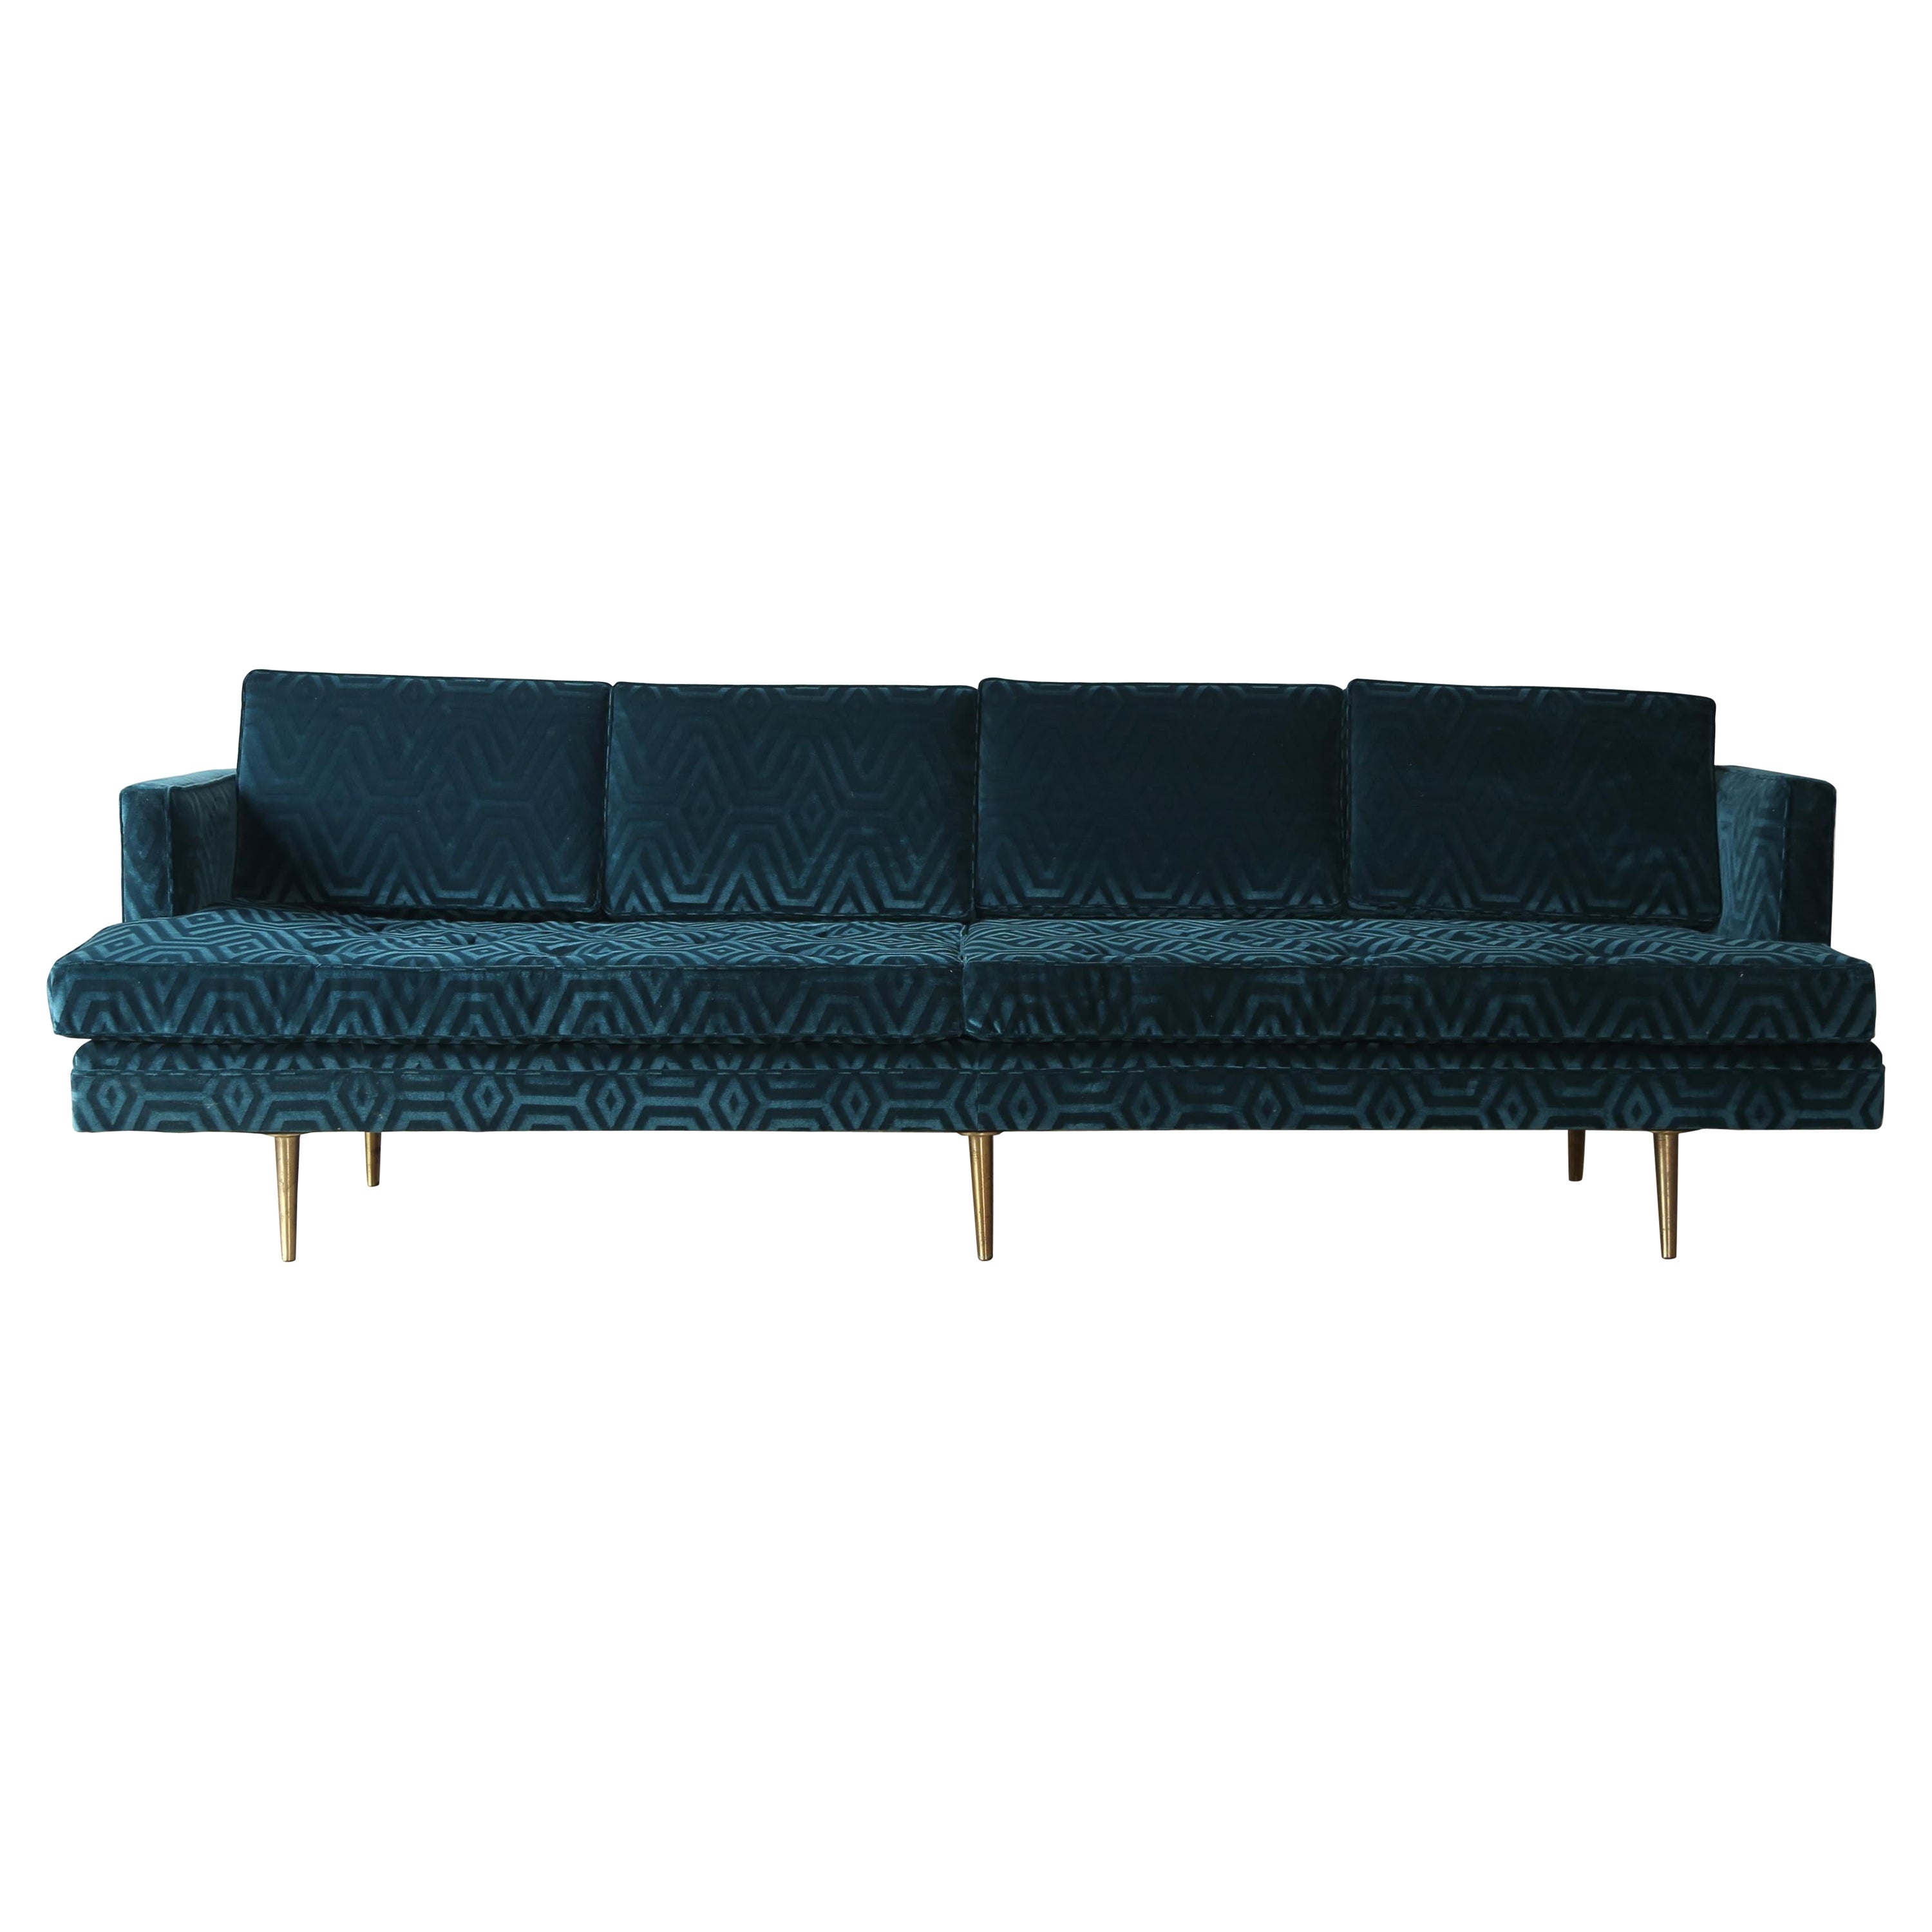 What is the sturdiest sofa?